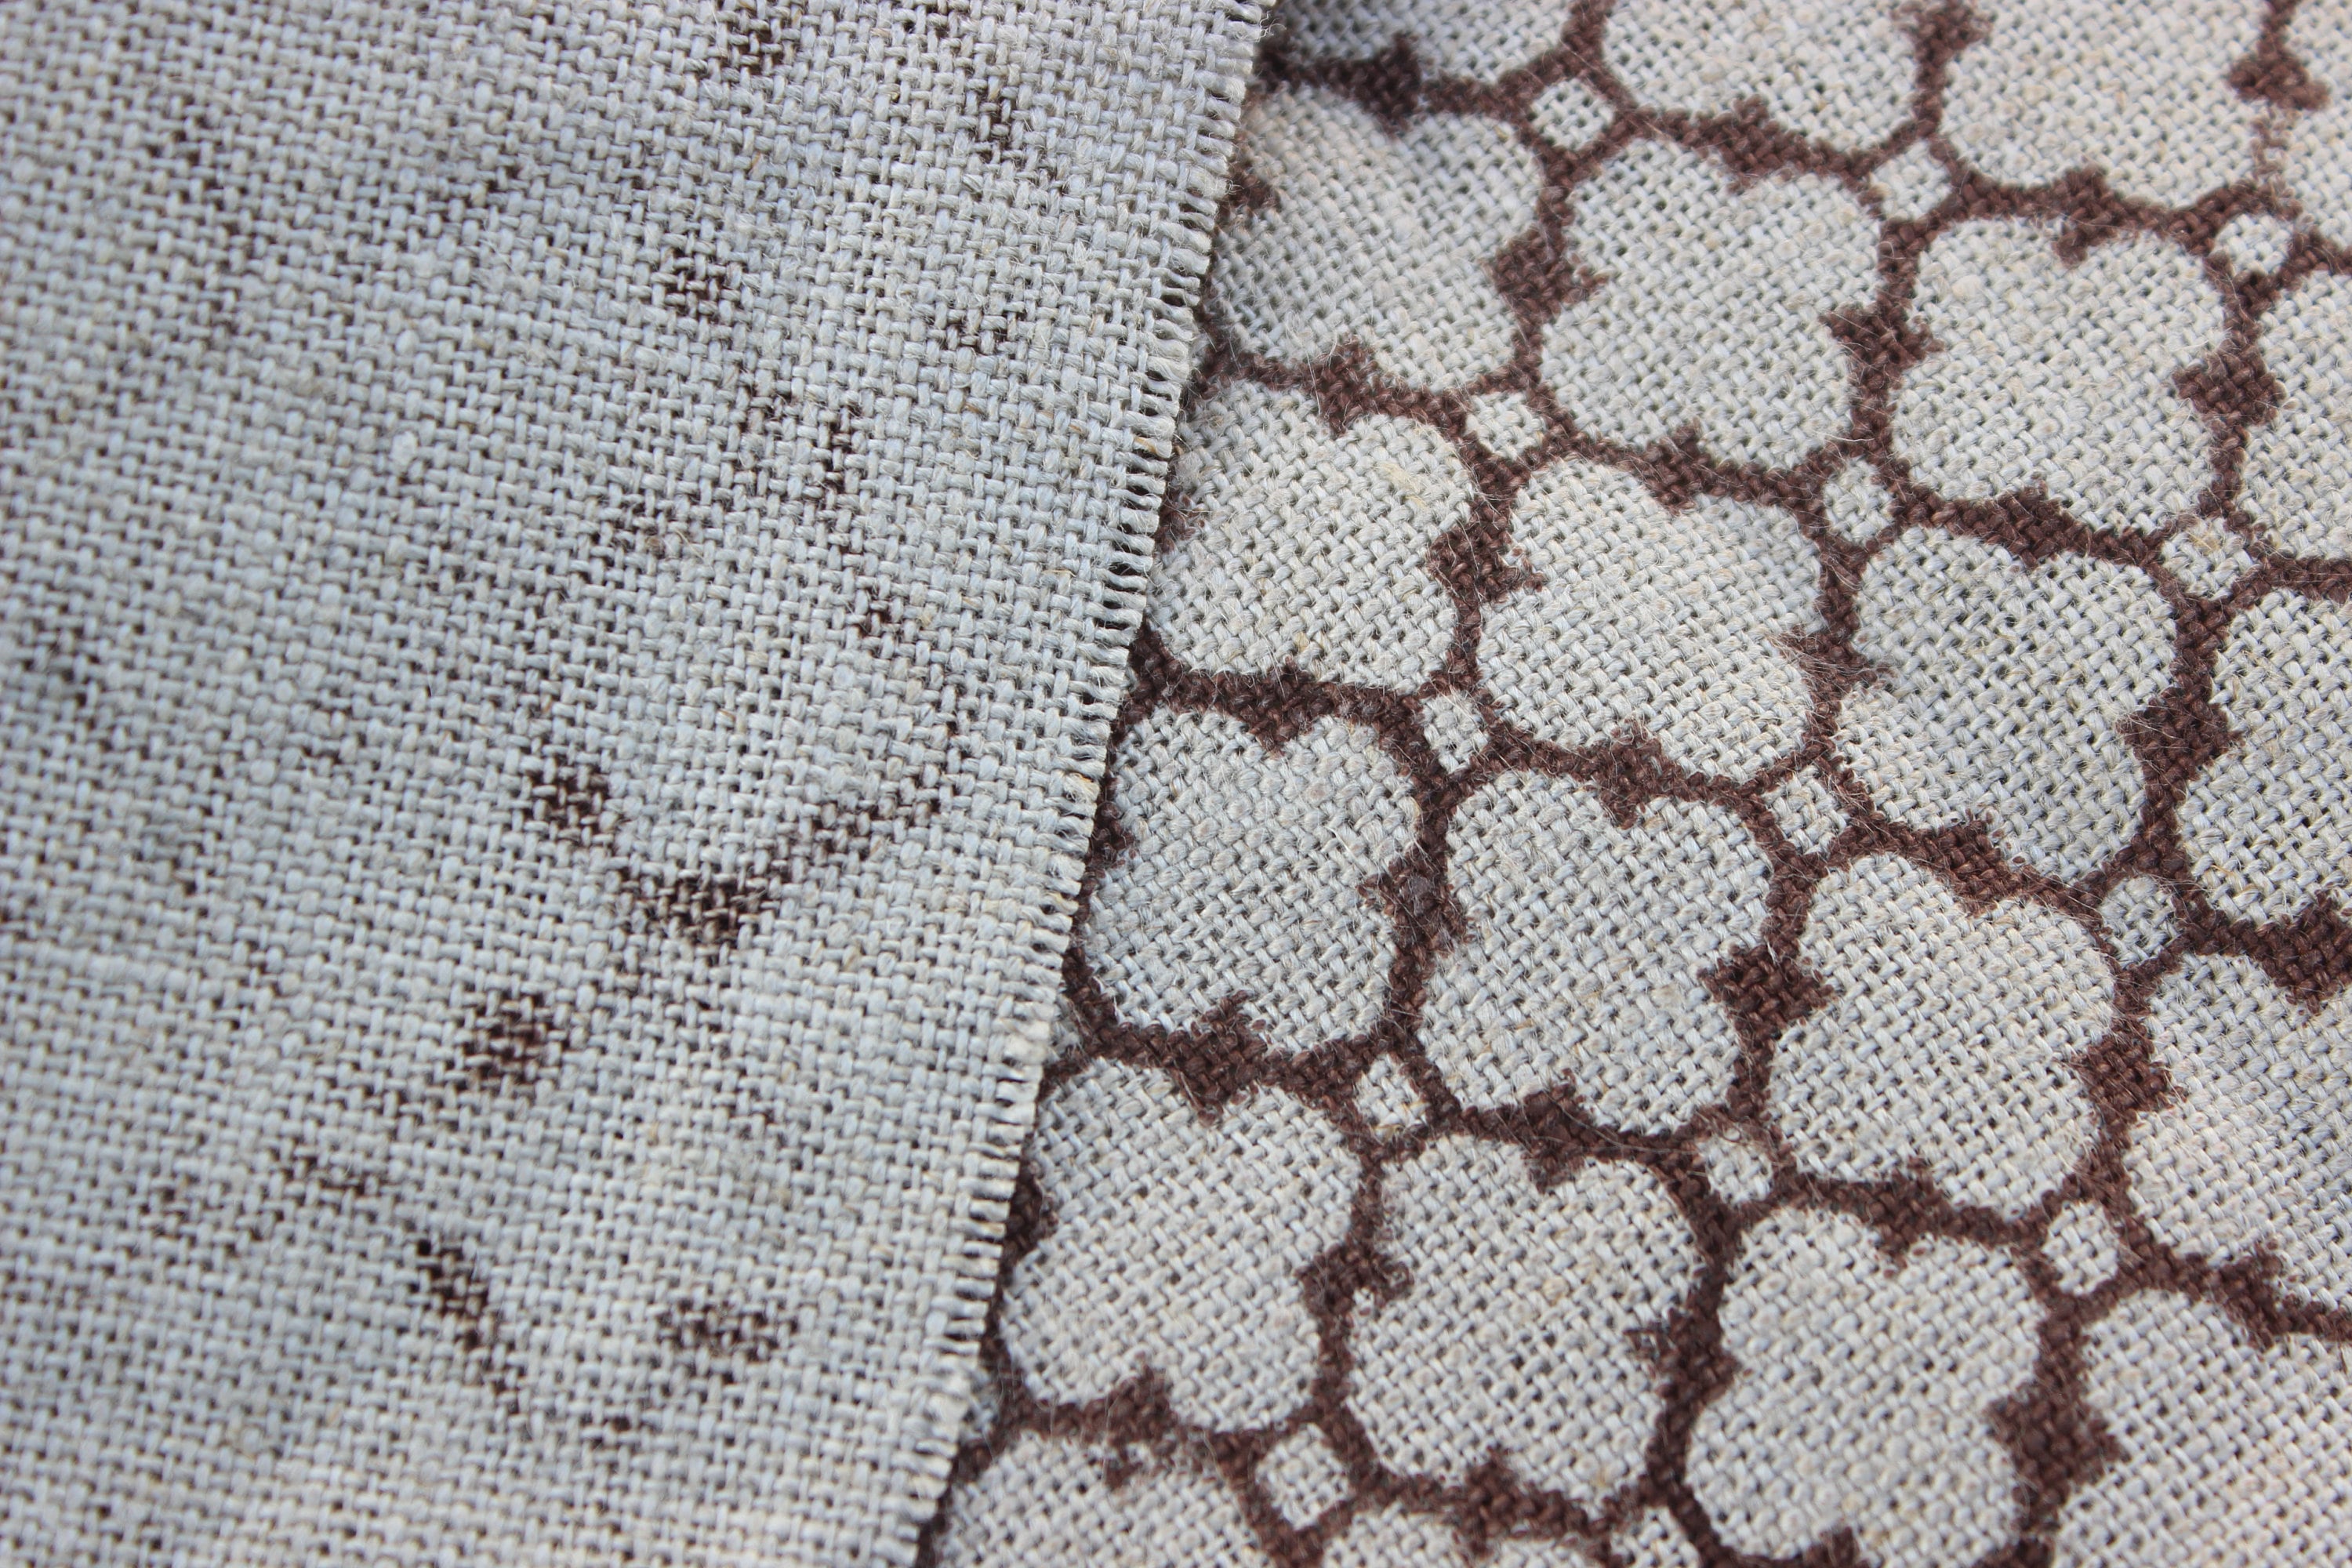 Block Print Linen Fabric, Paheli  Fabric By The Yard, Indian Fabric, Handmade Hand Block Print Fabric, Designer Upholstery Blockprint Pillow Fabric